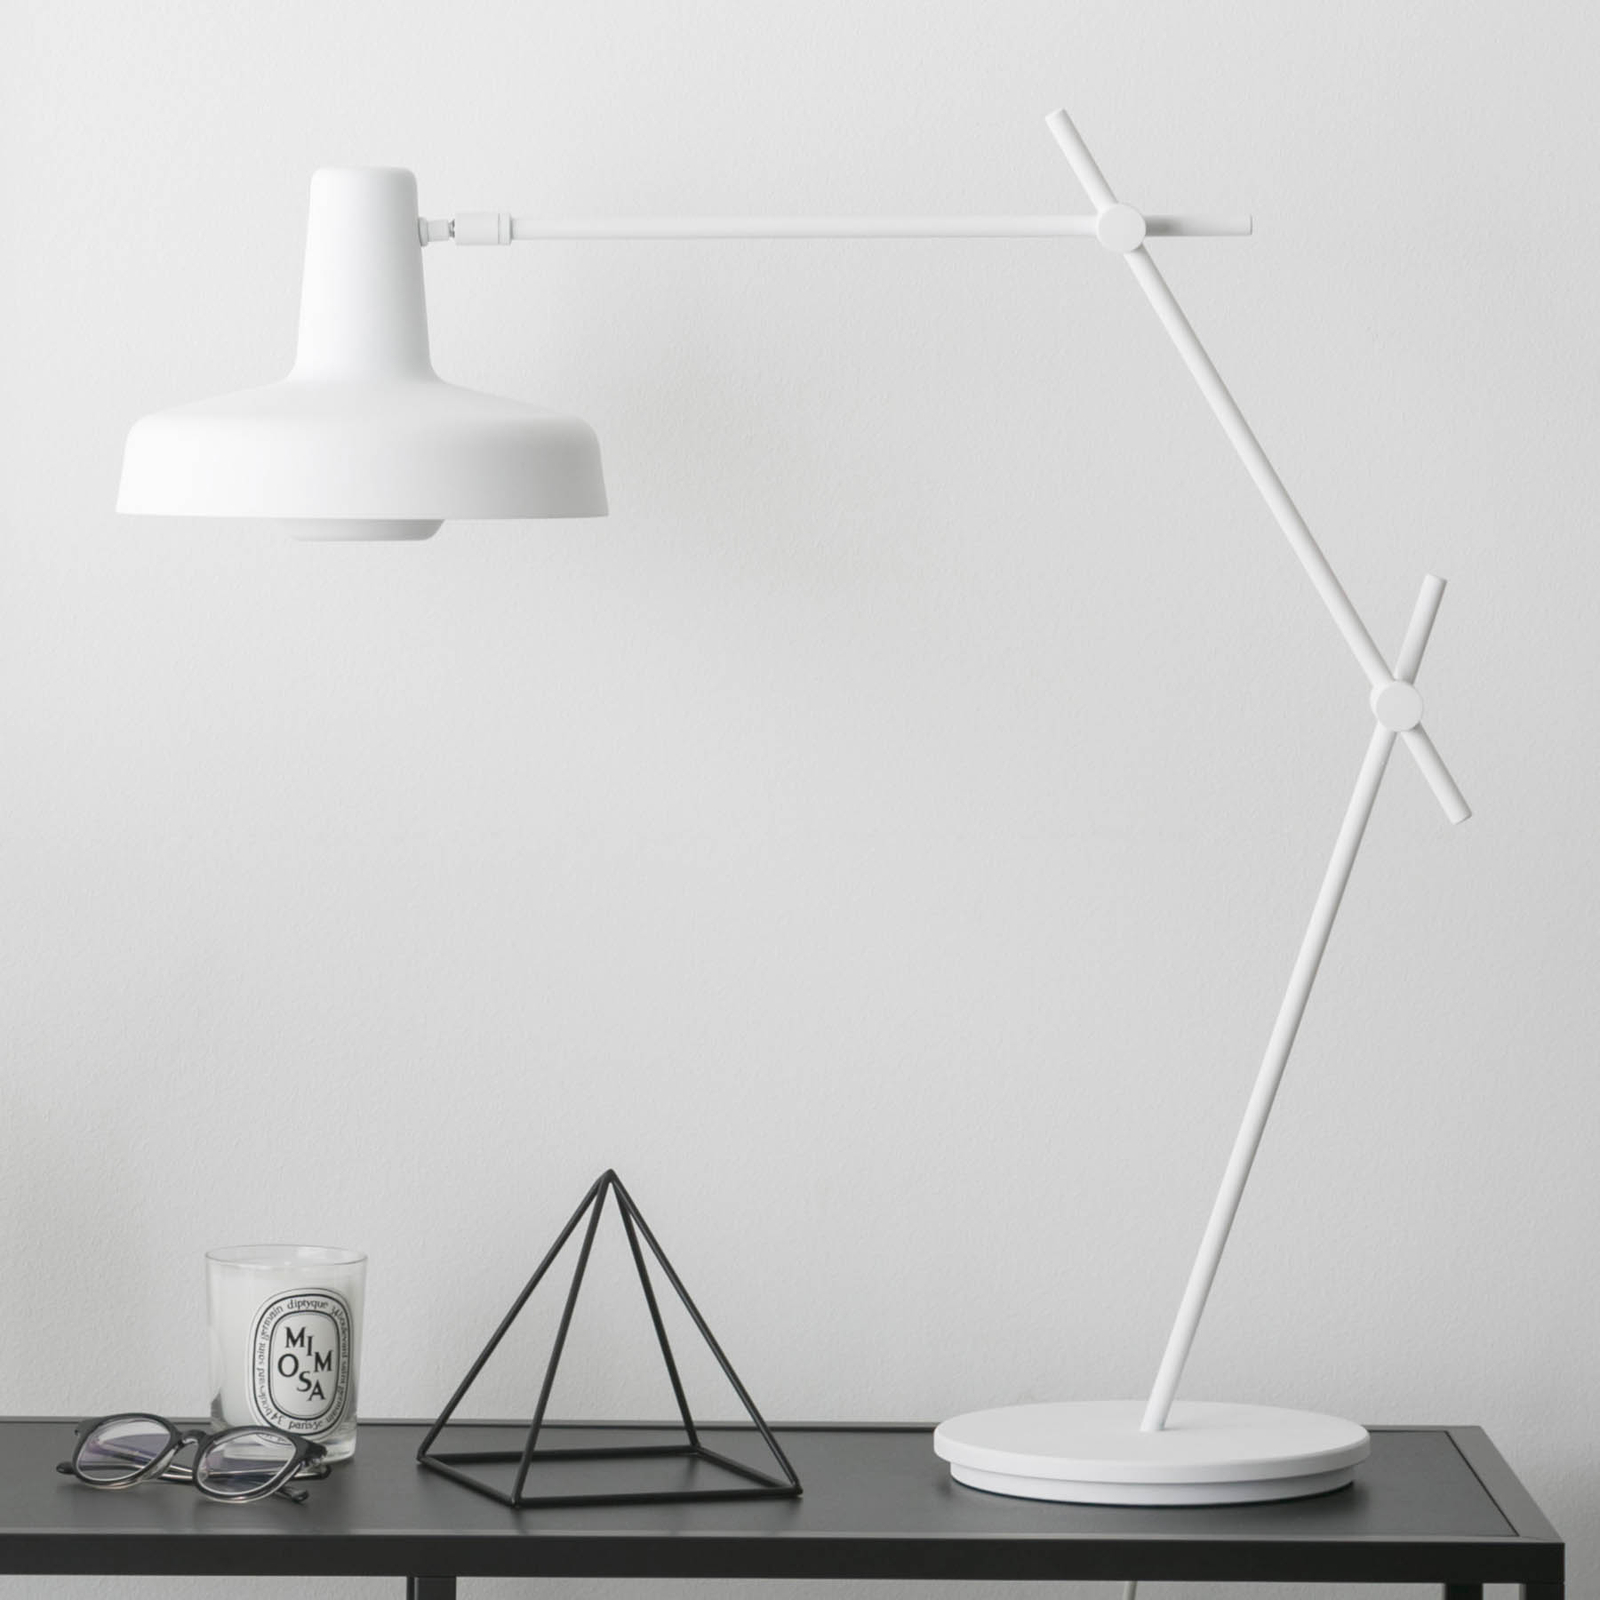 GRUPA Arigato table lamp, three-piece arm, white